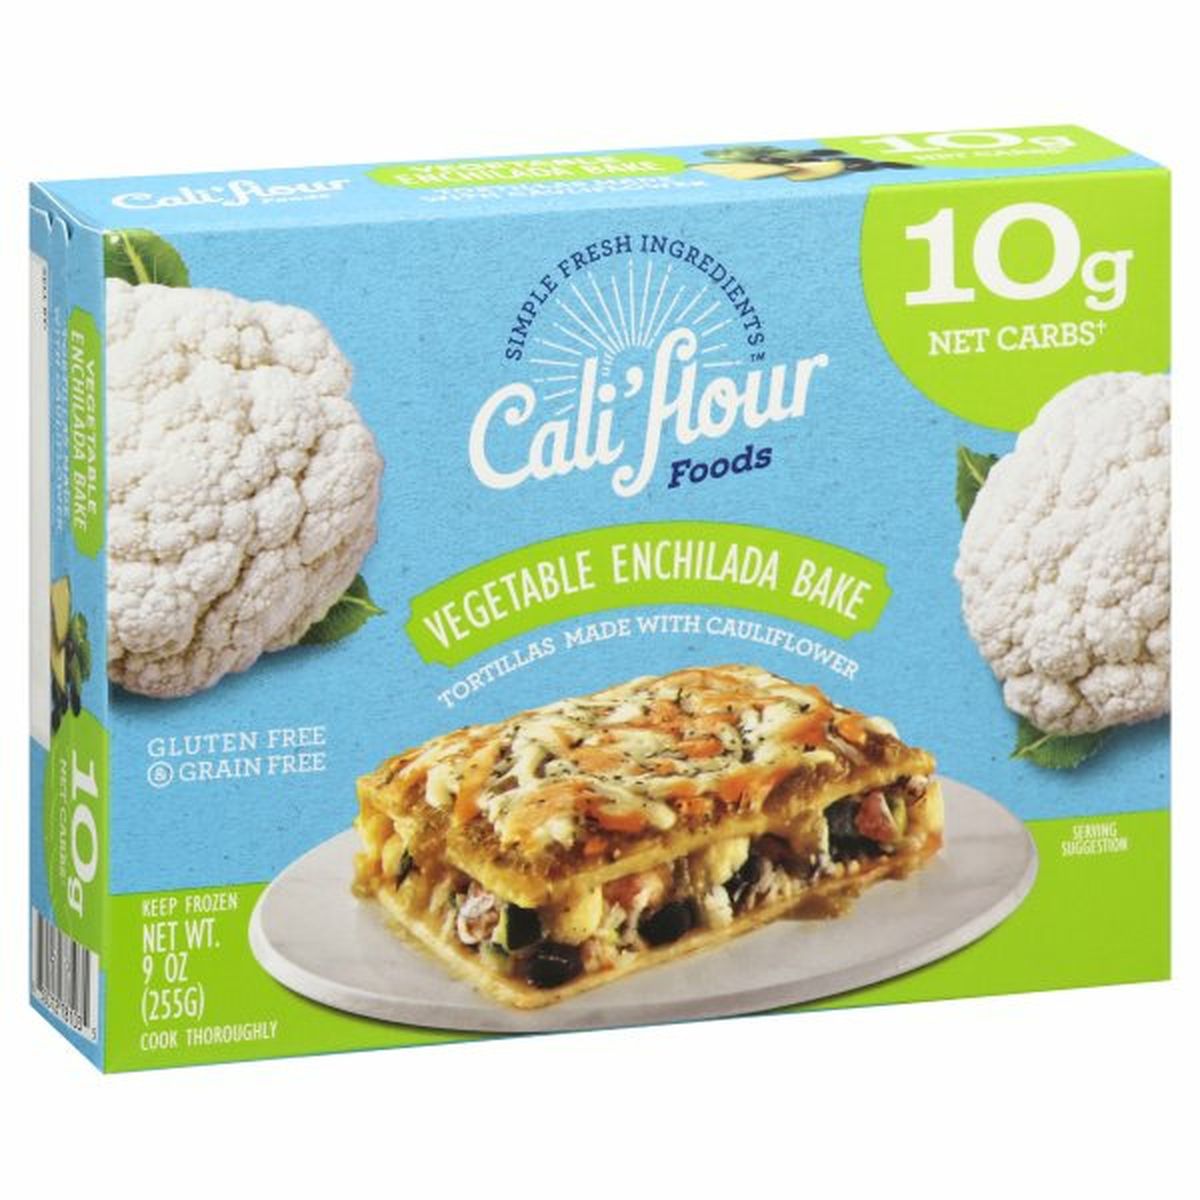 Calories in Cali'flour Foods Enchilada Bake, Vegetable